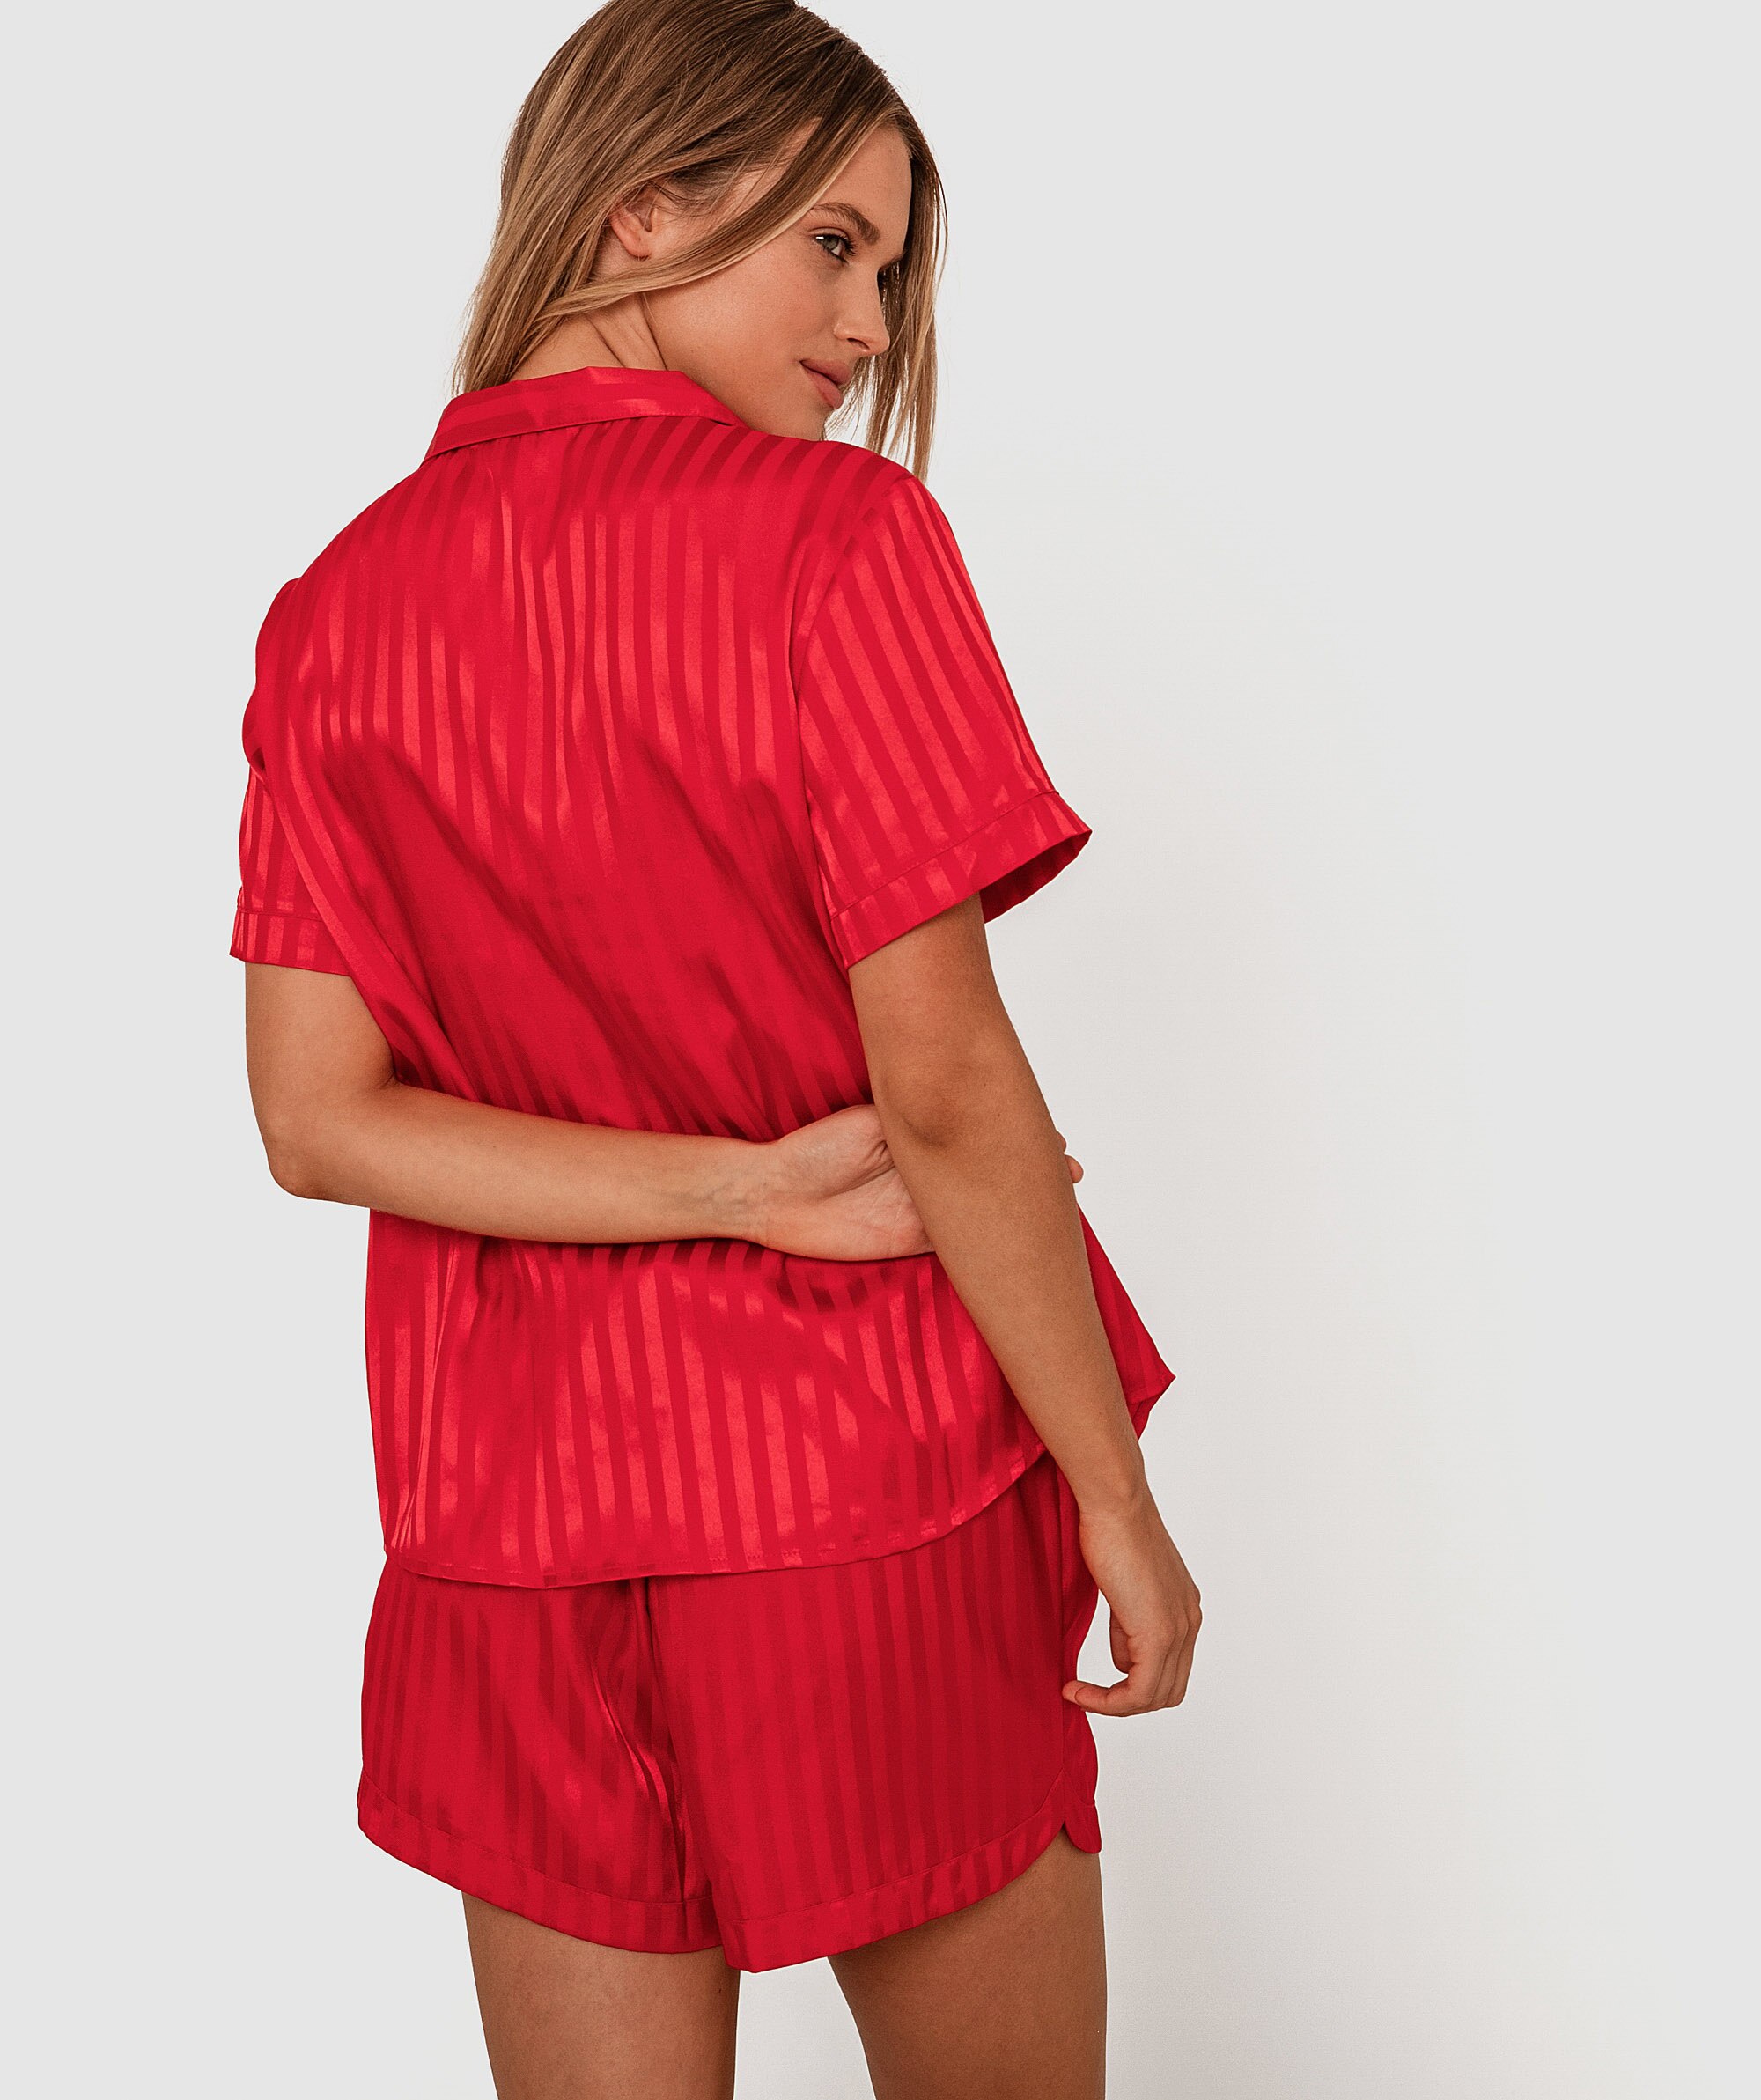 Stardust Short Sleeve PJ Set - Red